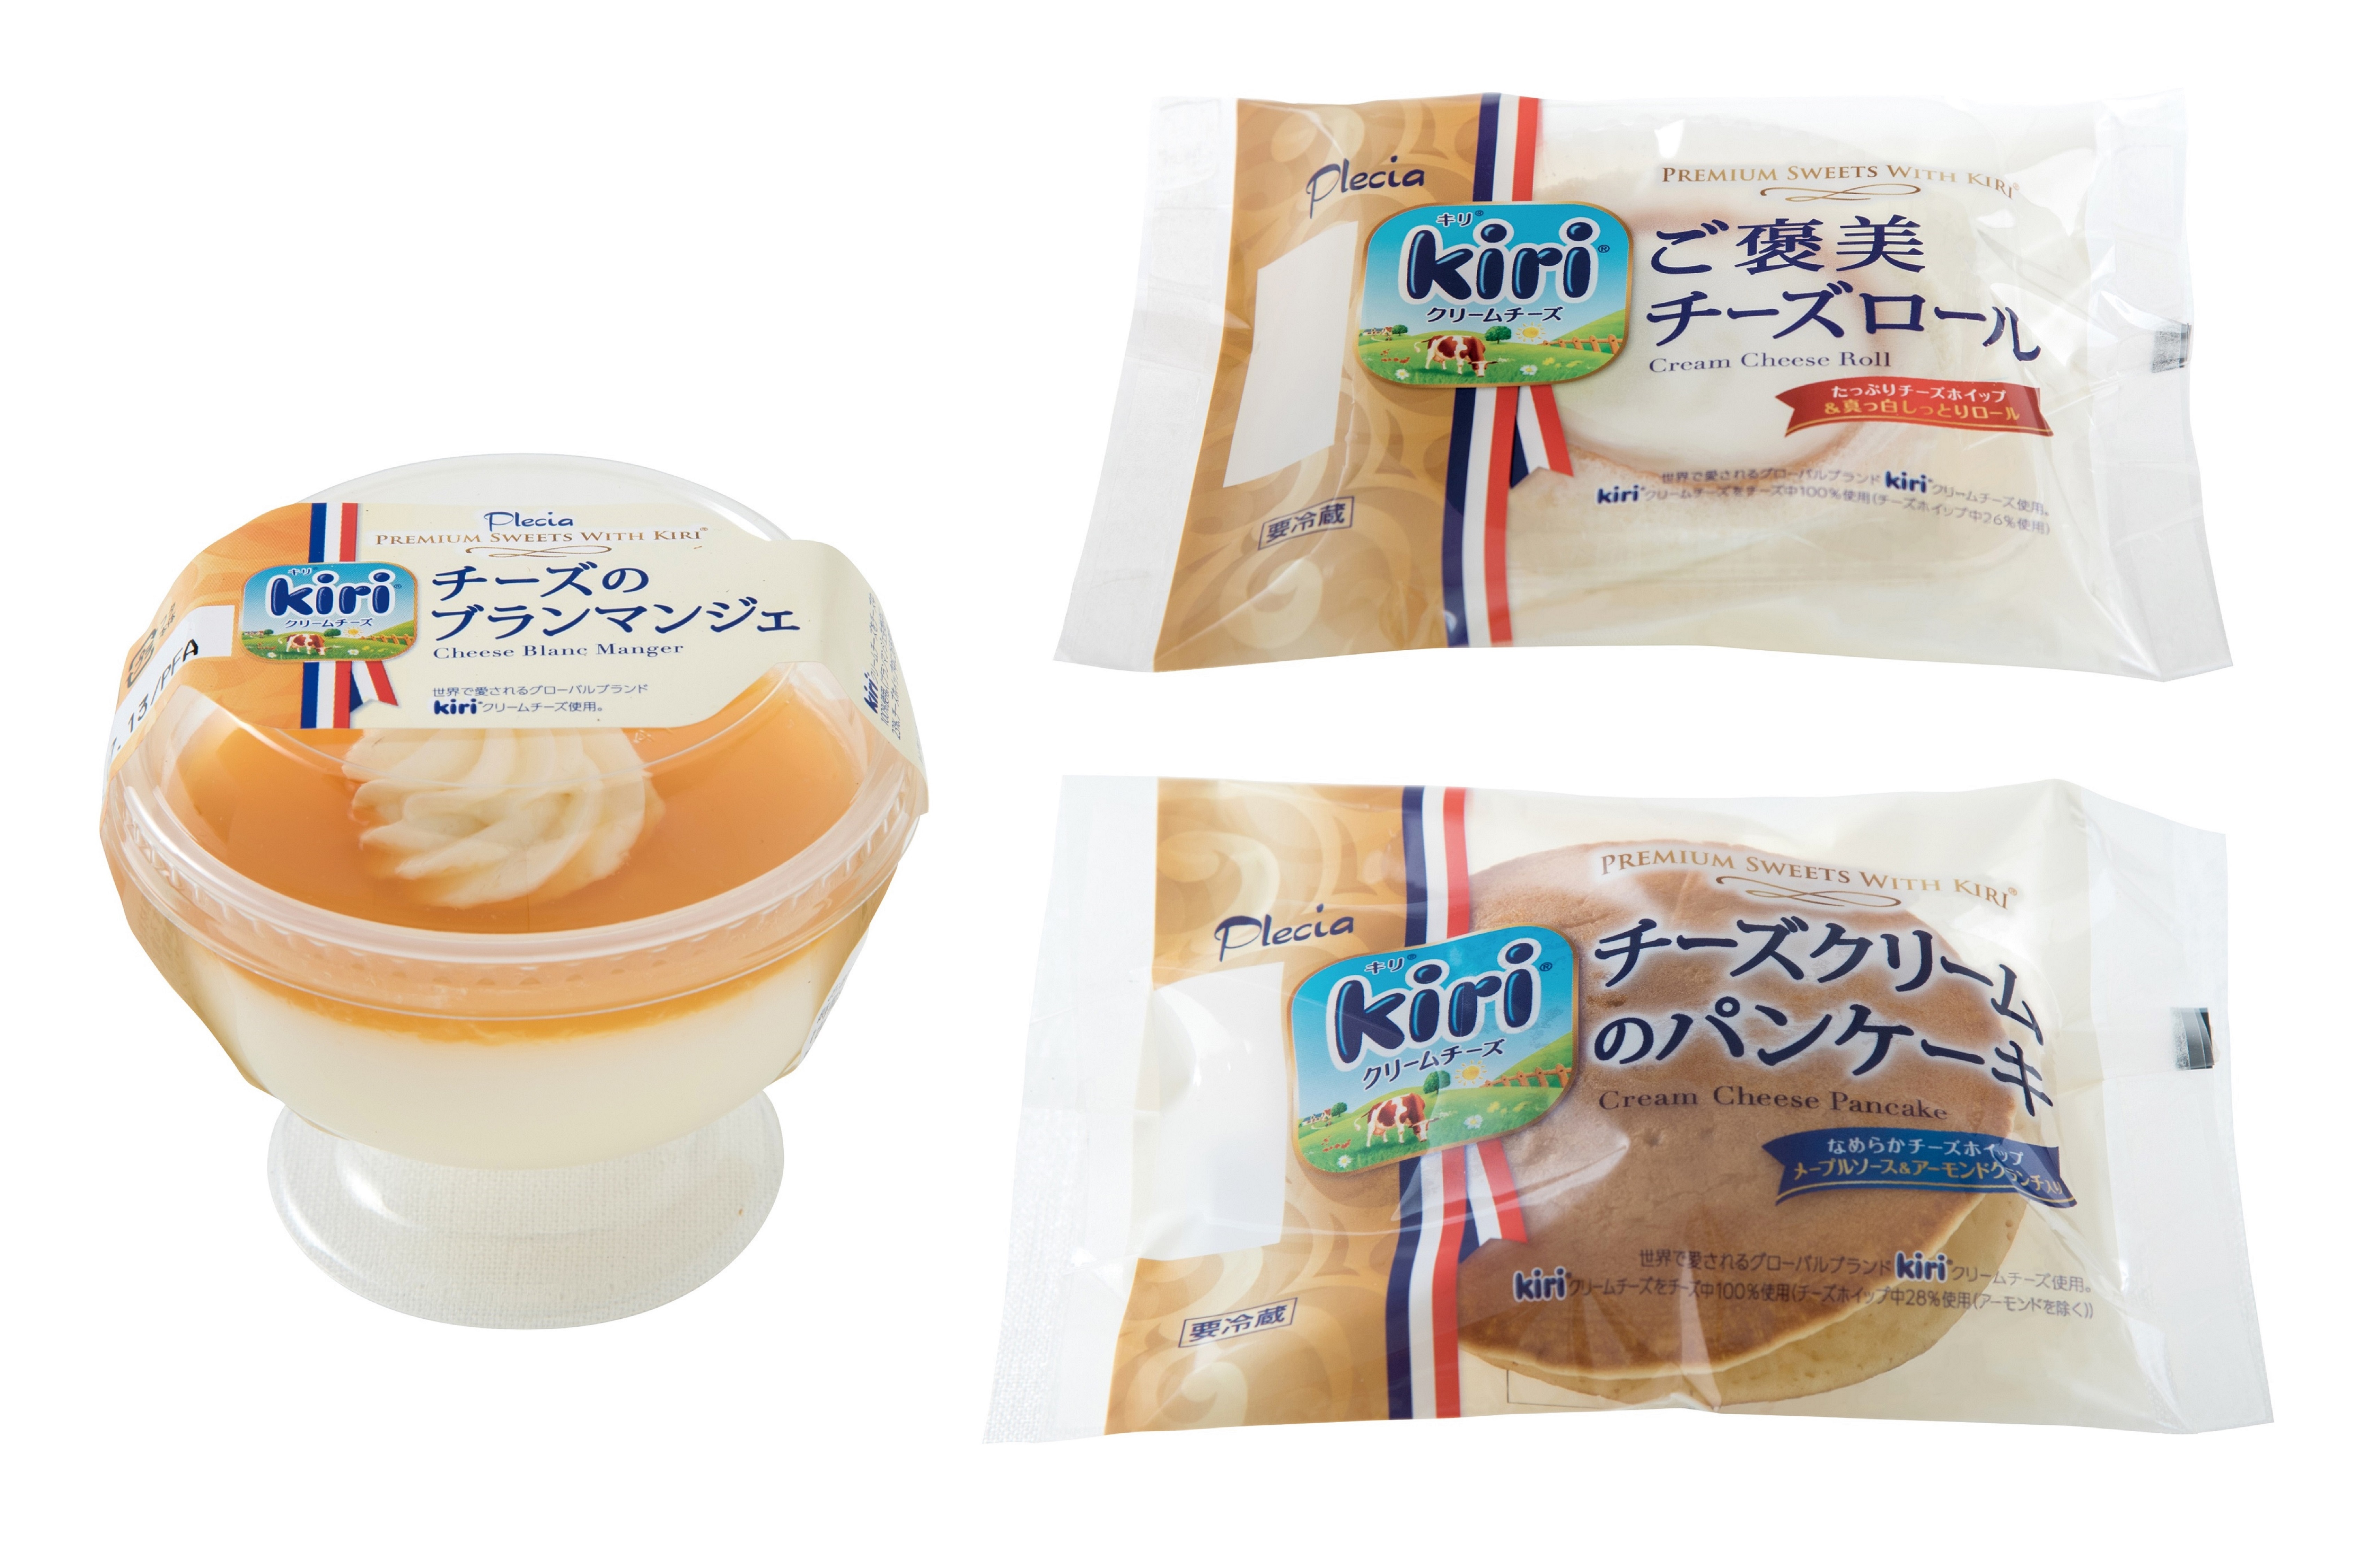 Kiri R のクリーミーで濃厚な味を楽しめる ごほうび スイーツシリーズ Premium Sweets With Kiri R 第2弾 新登場 ベル ジャポン株式会社のプレスリリース